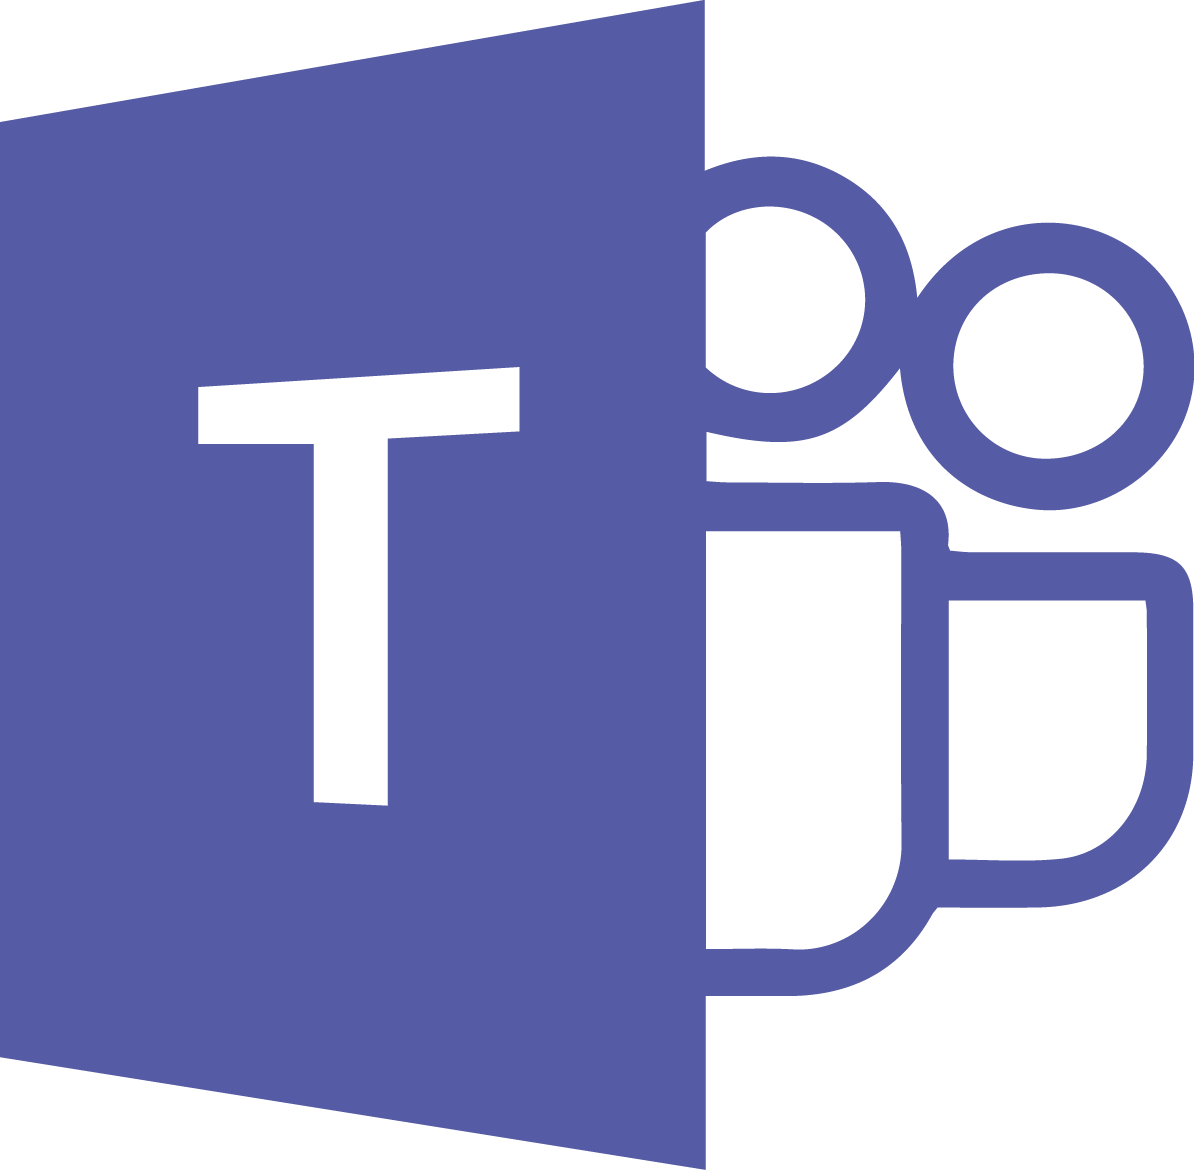 Microsoft Teams Microsoft Teams Logo Vector 1194x1170 Png Clipart Download